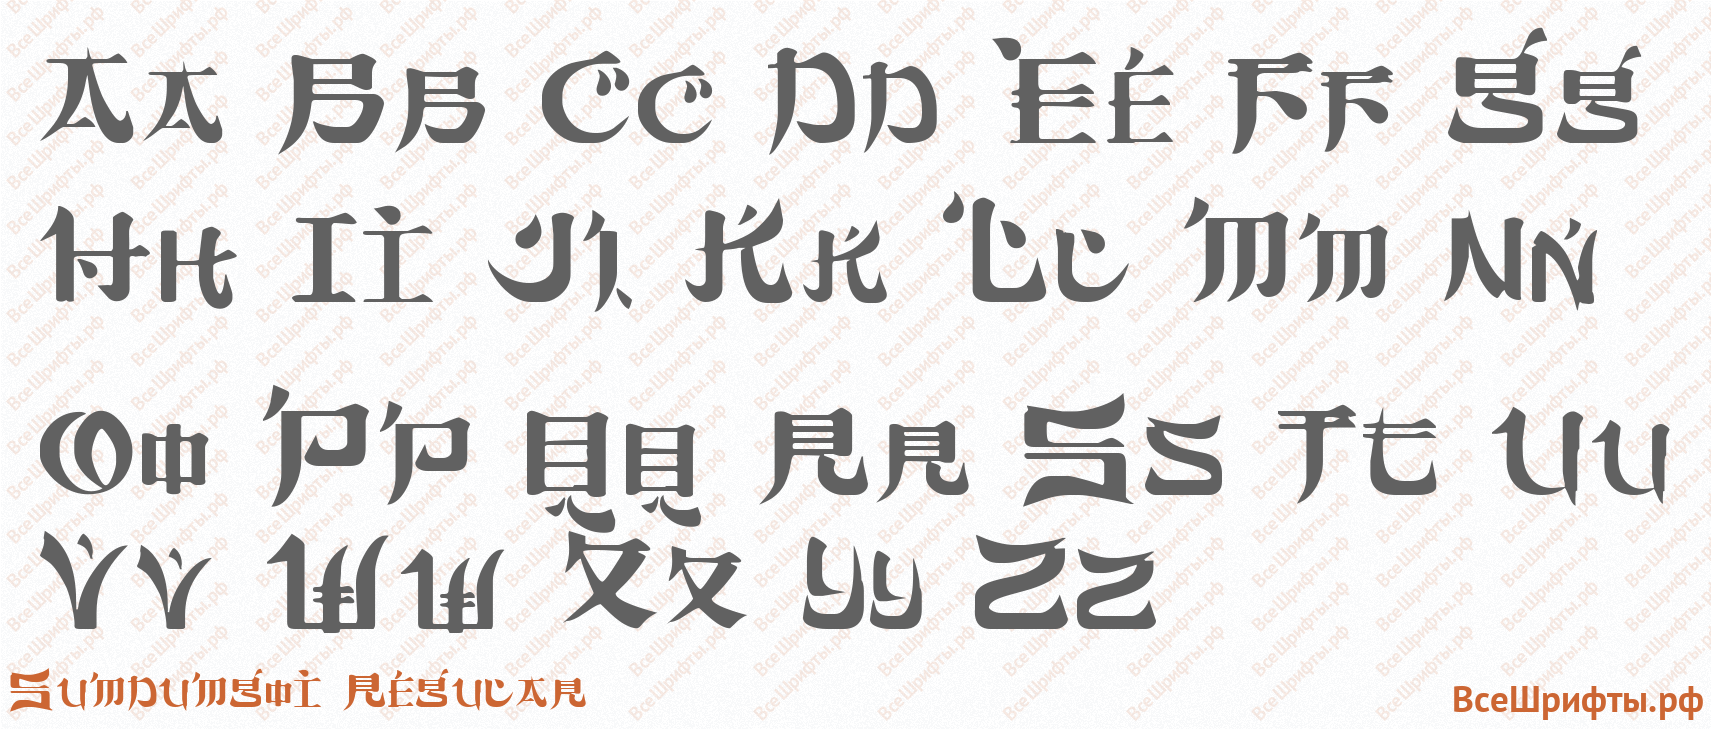 Шрифт Sumdumgoi Regular с латинскими буквами